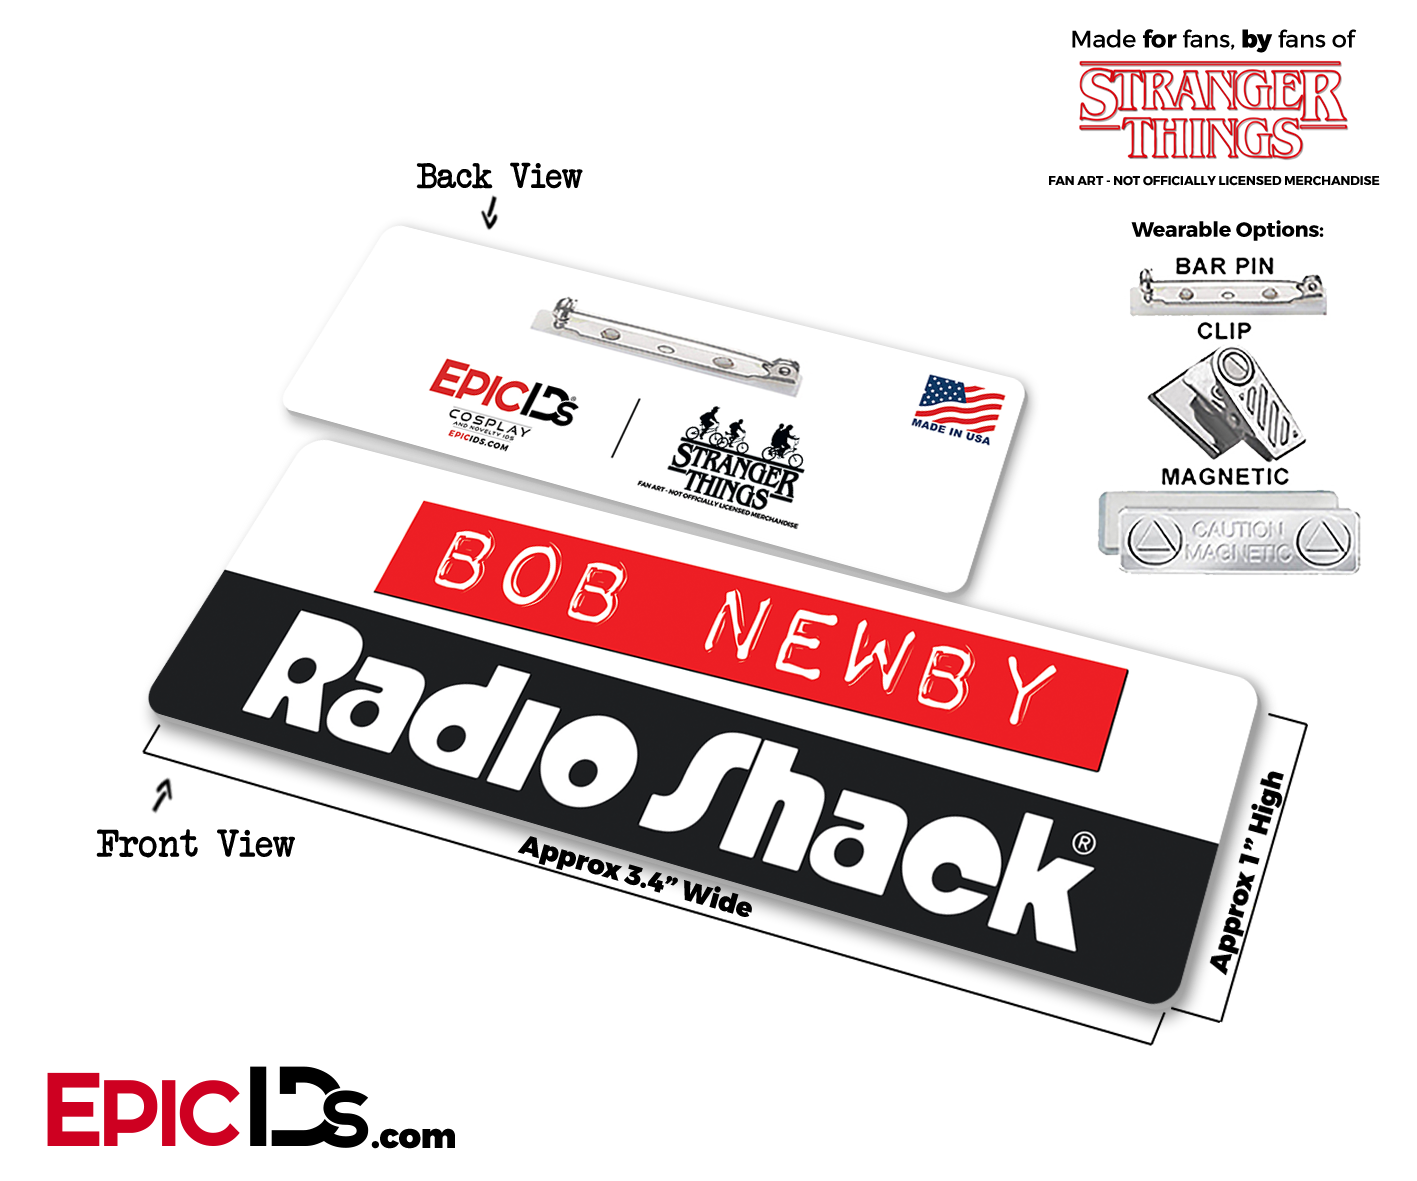 Retro Radio Shack 'Stranger Things' Cosplay Name Badge - Bob Newby